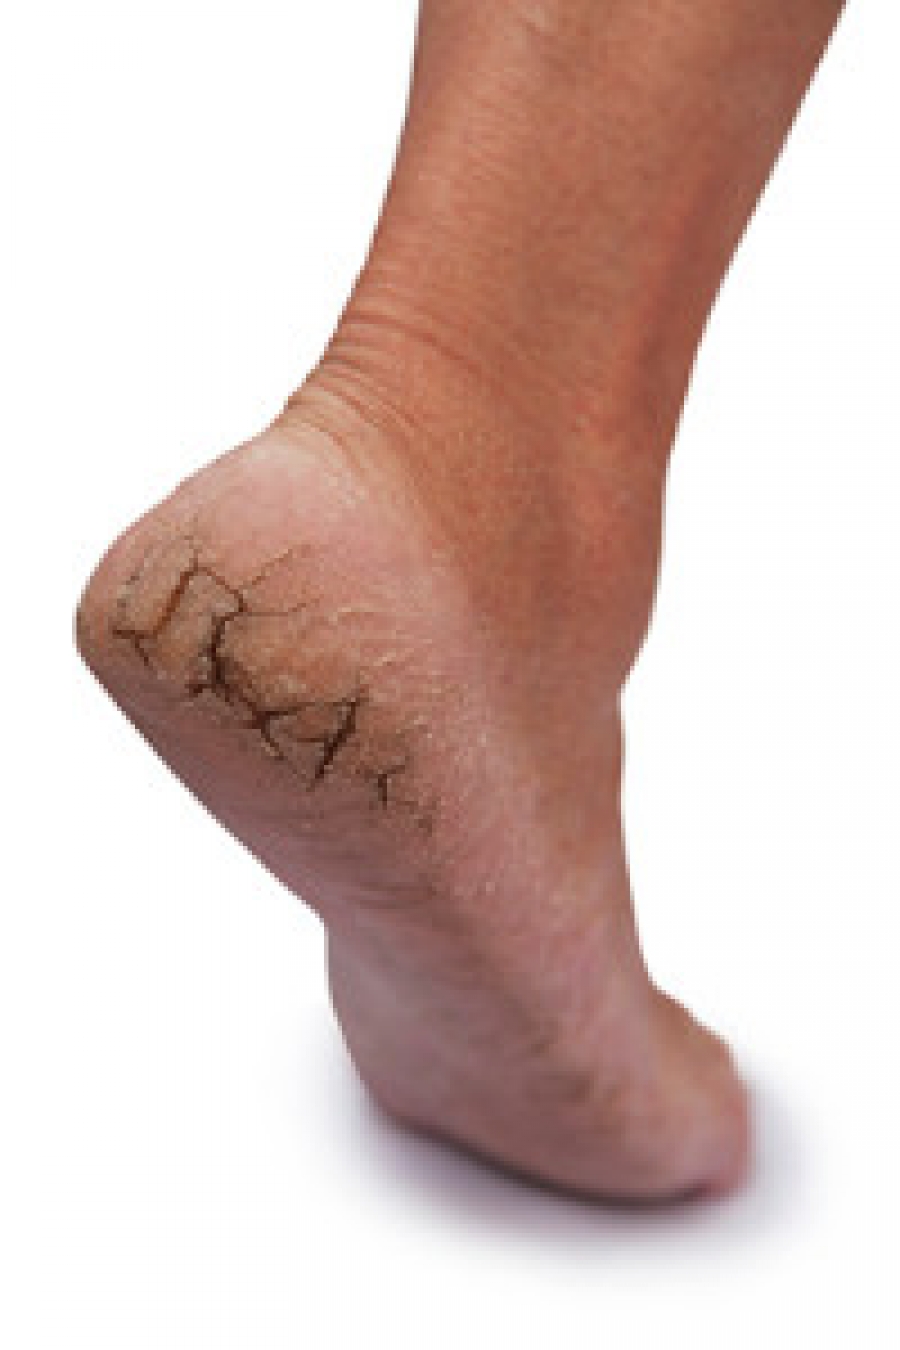 Dry Cracked Callused Heels - YouTube